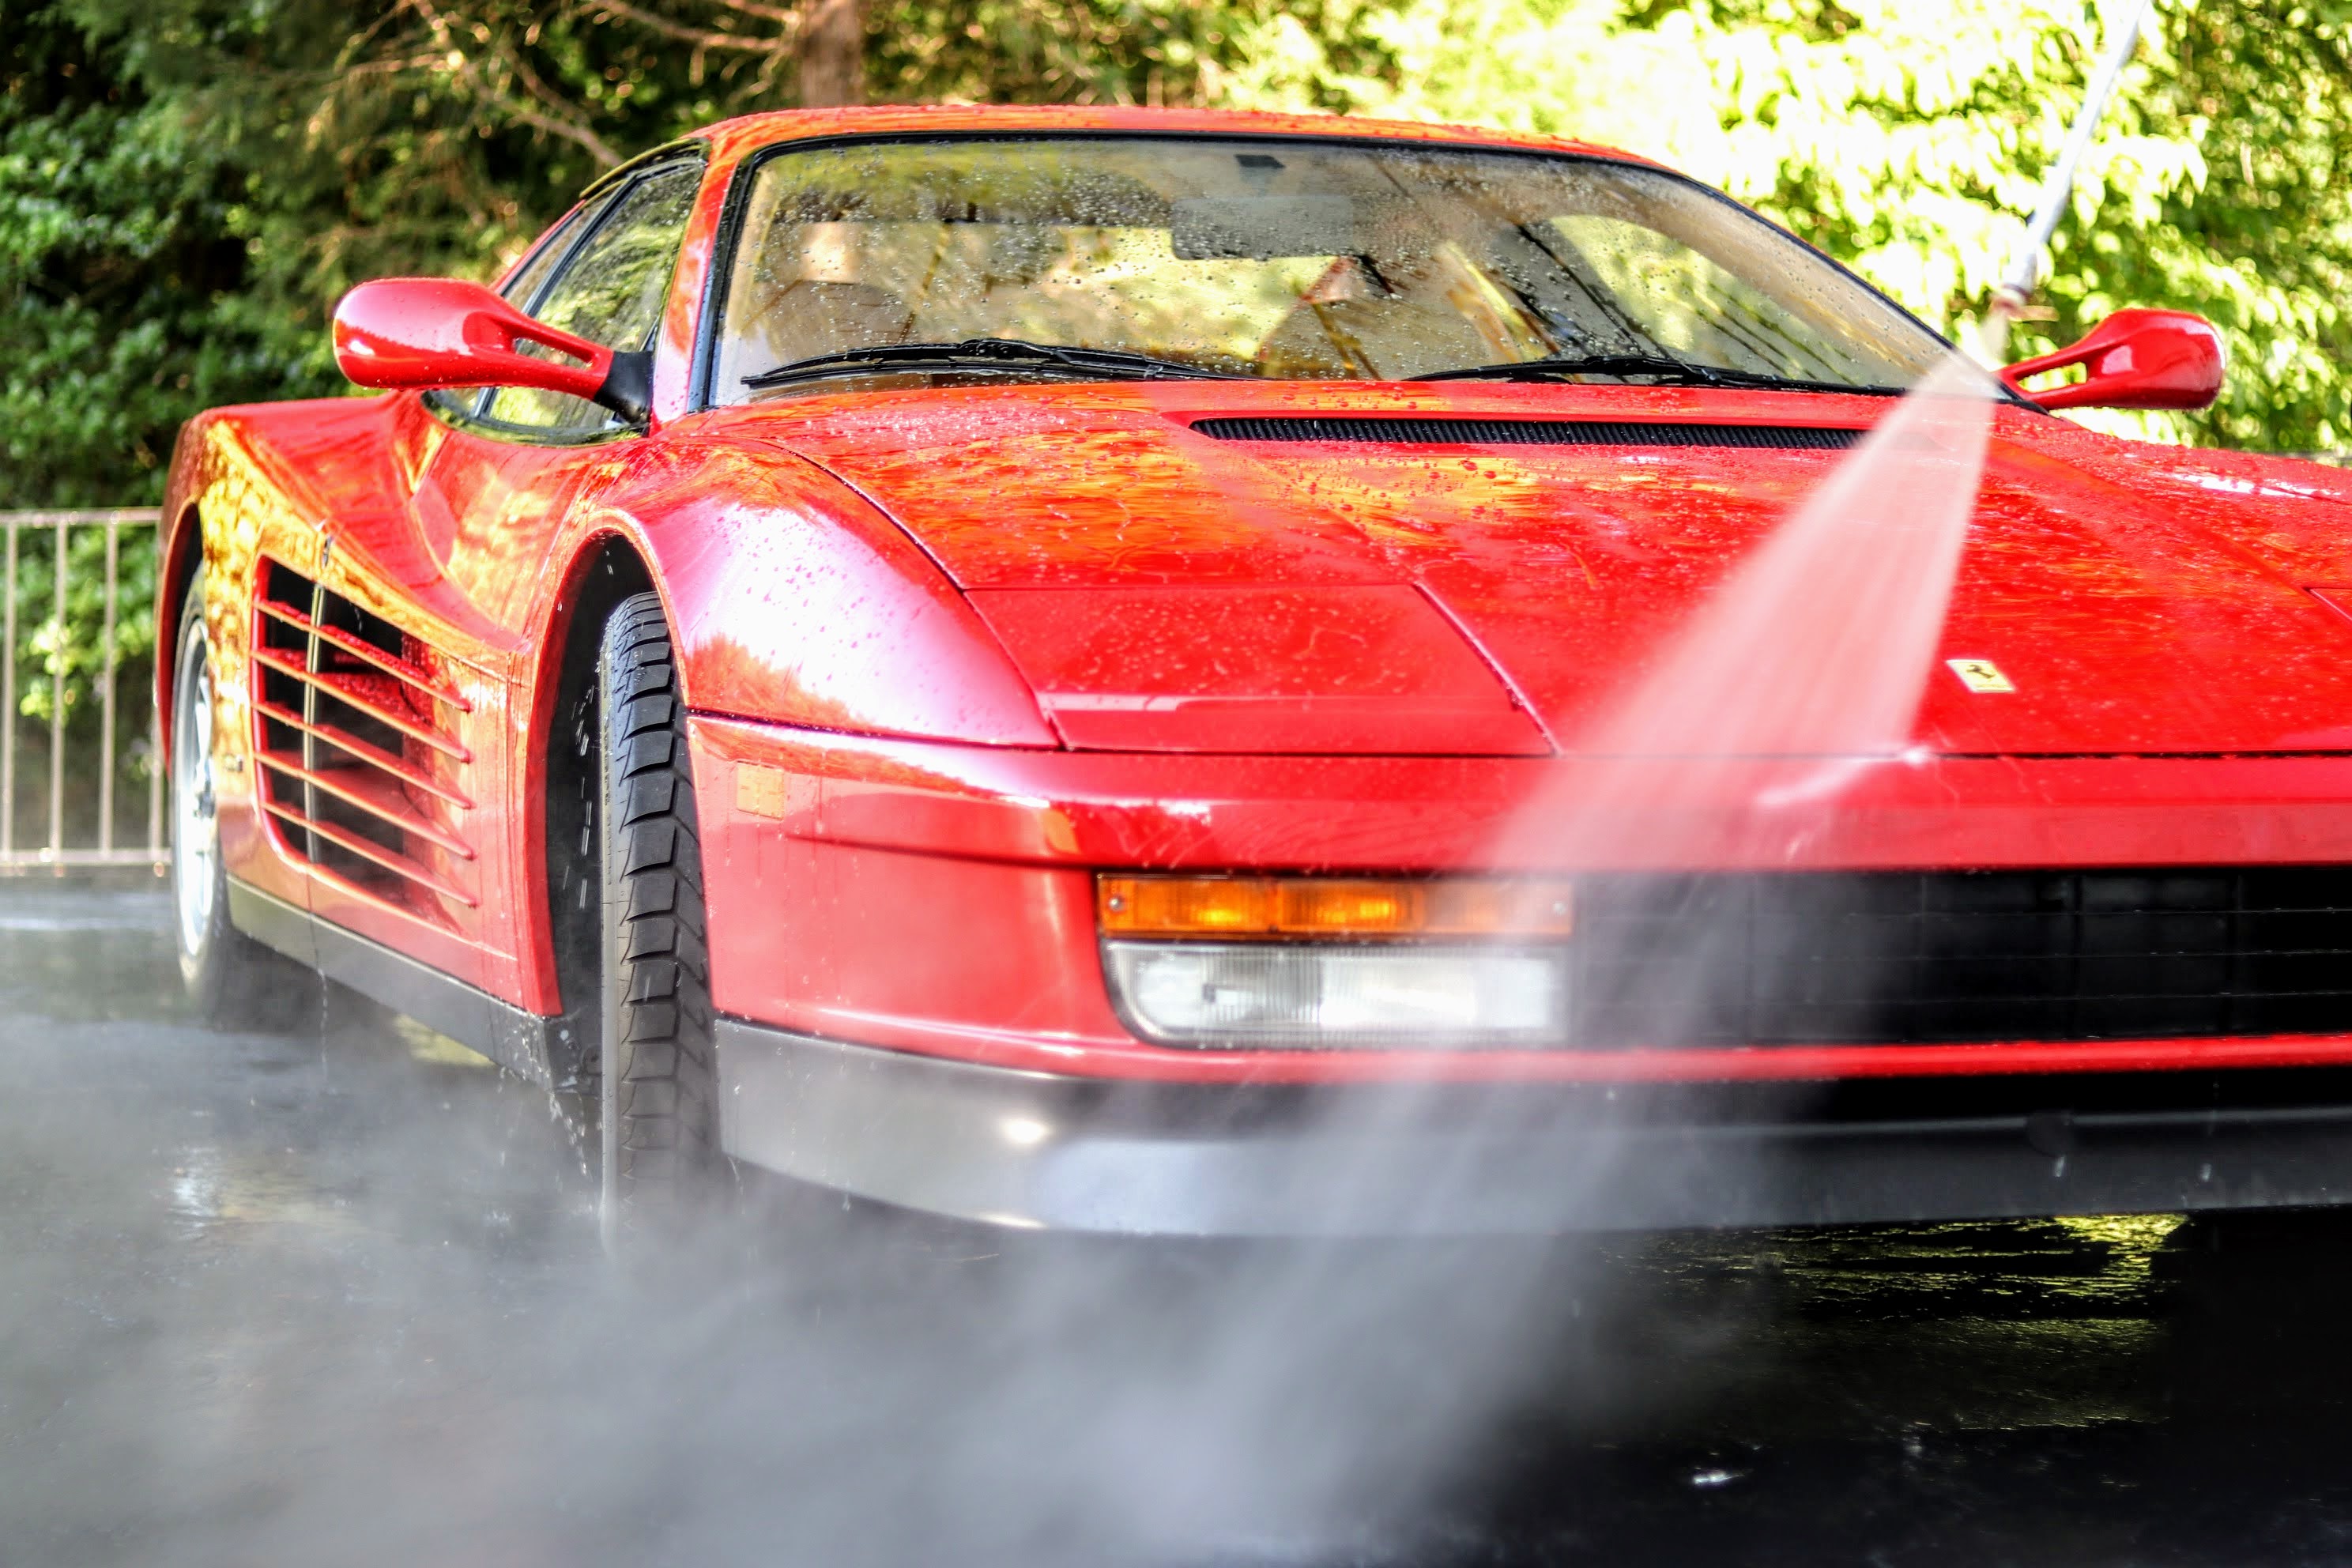 Rinsing the Ferrari Testarossa